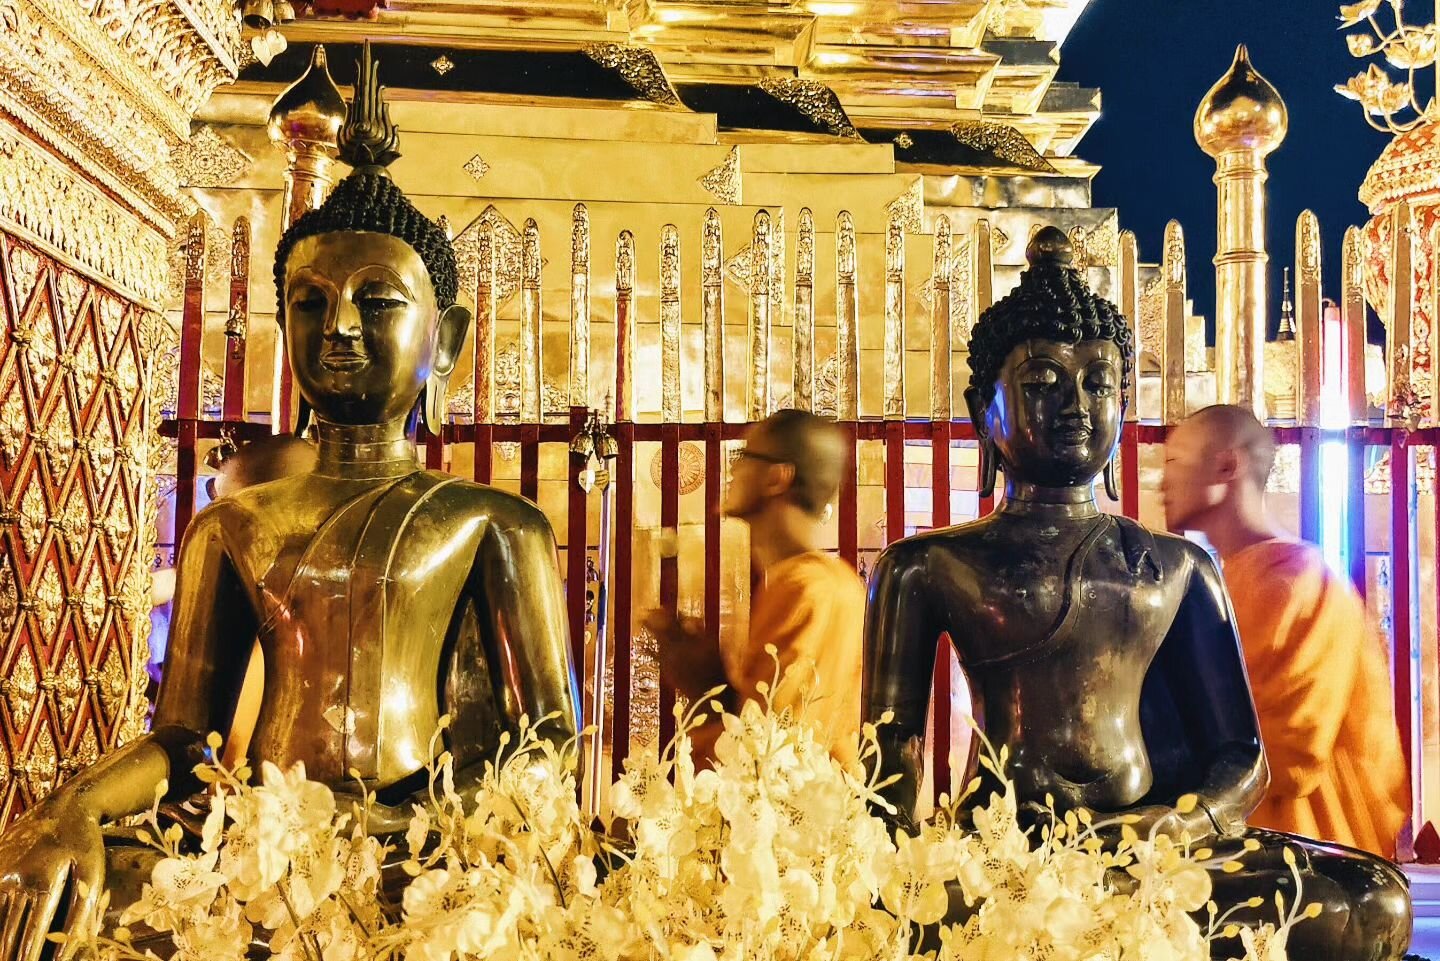 Wat Phra That Doi Suthep

Chiang Mai, TH | Nov. 2022